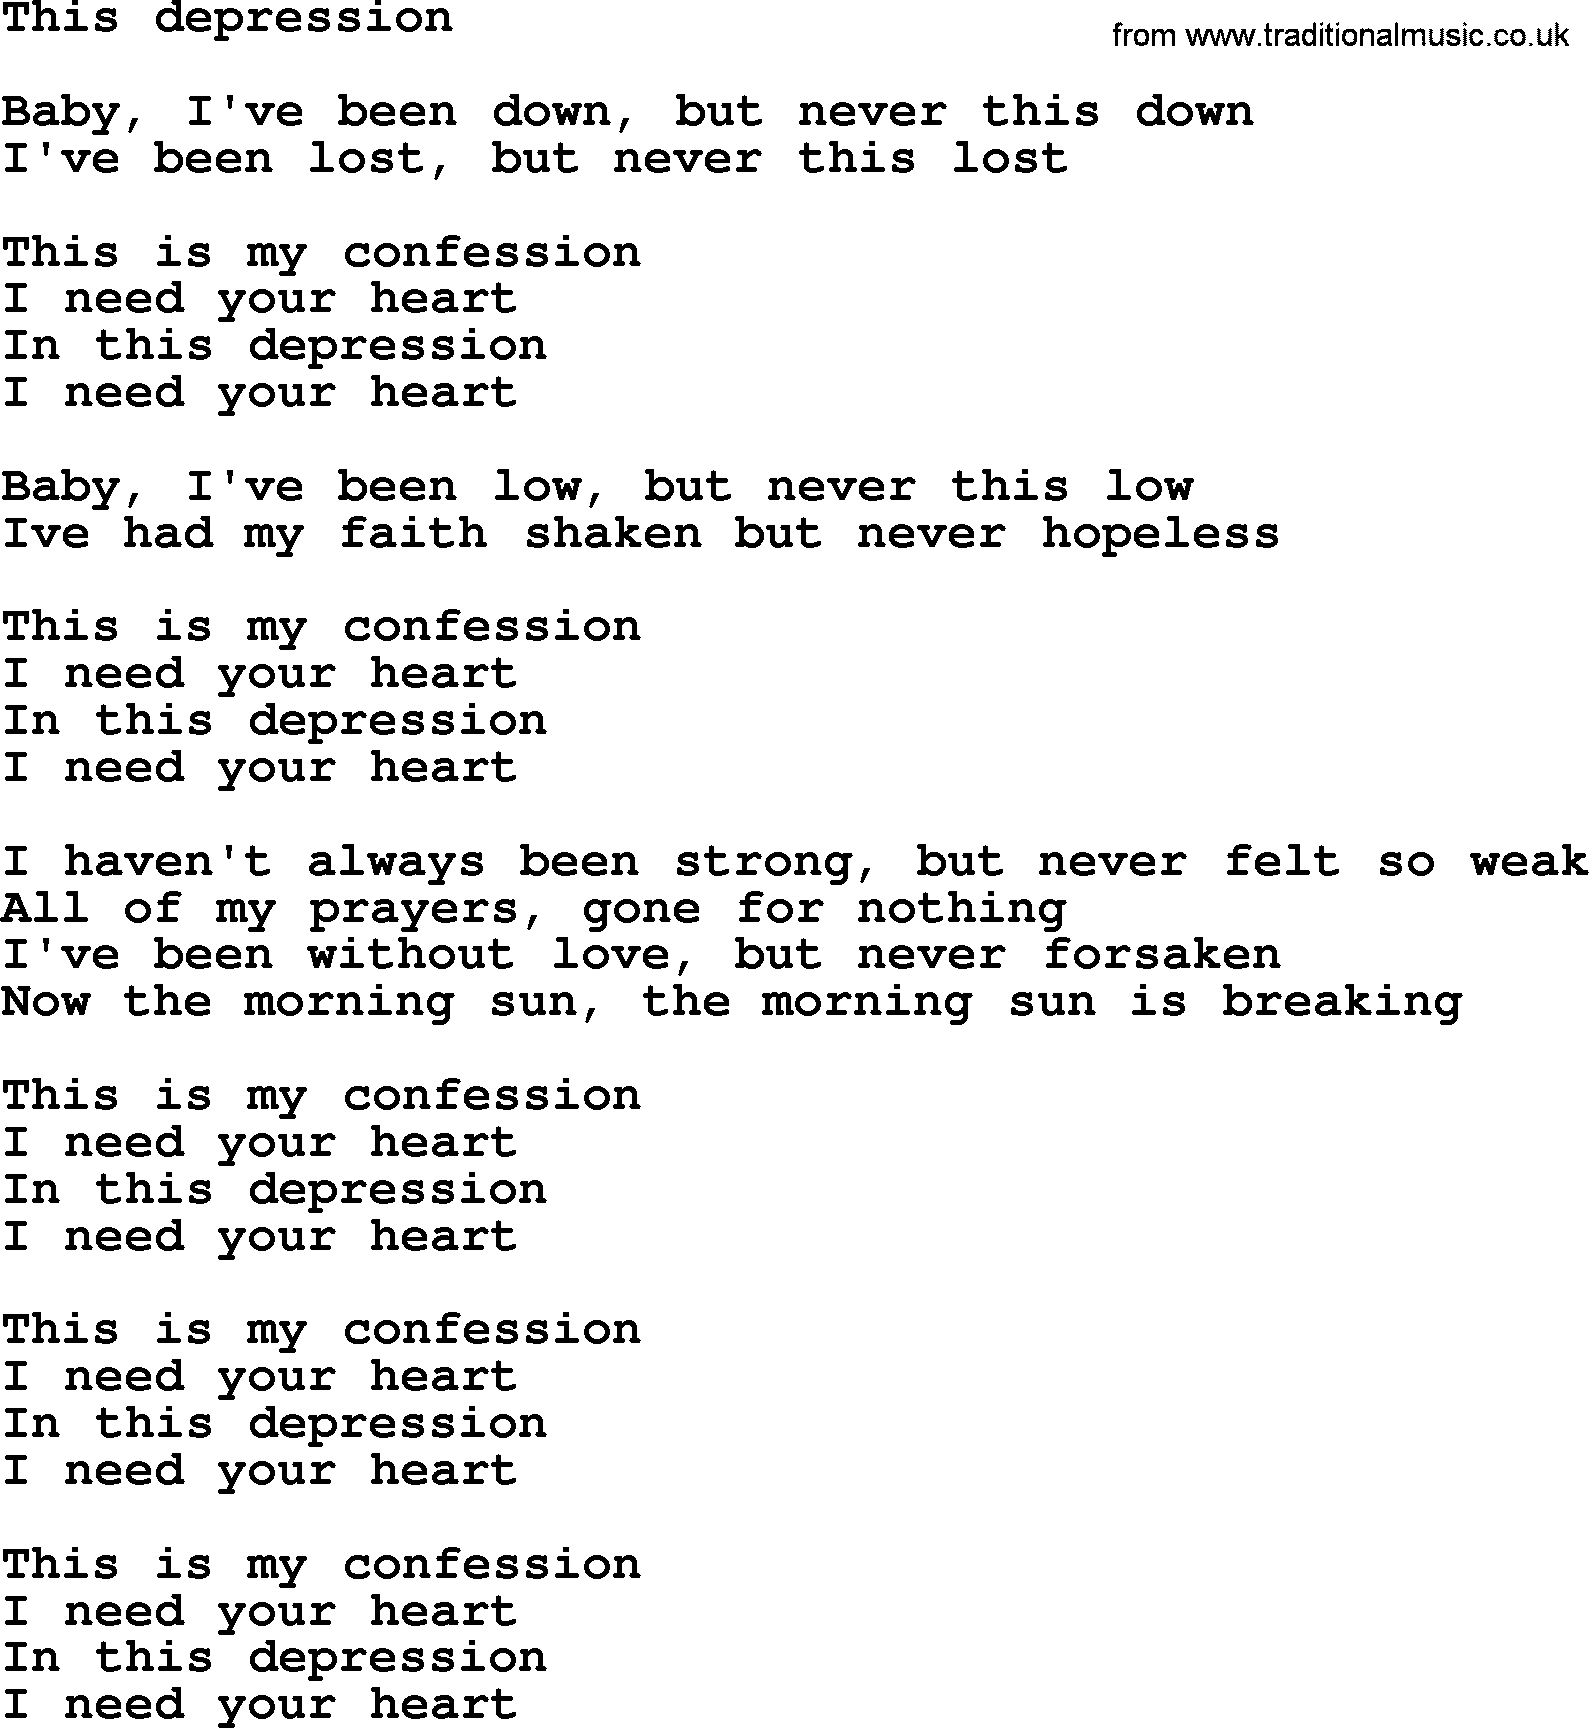 Bruce Springsteen song: This Depression lyrics